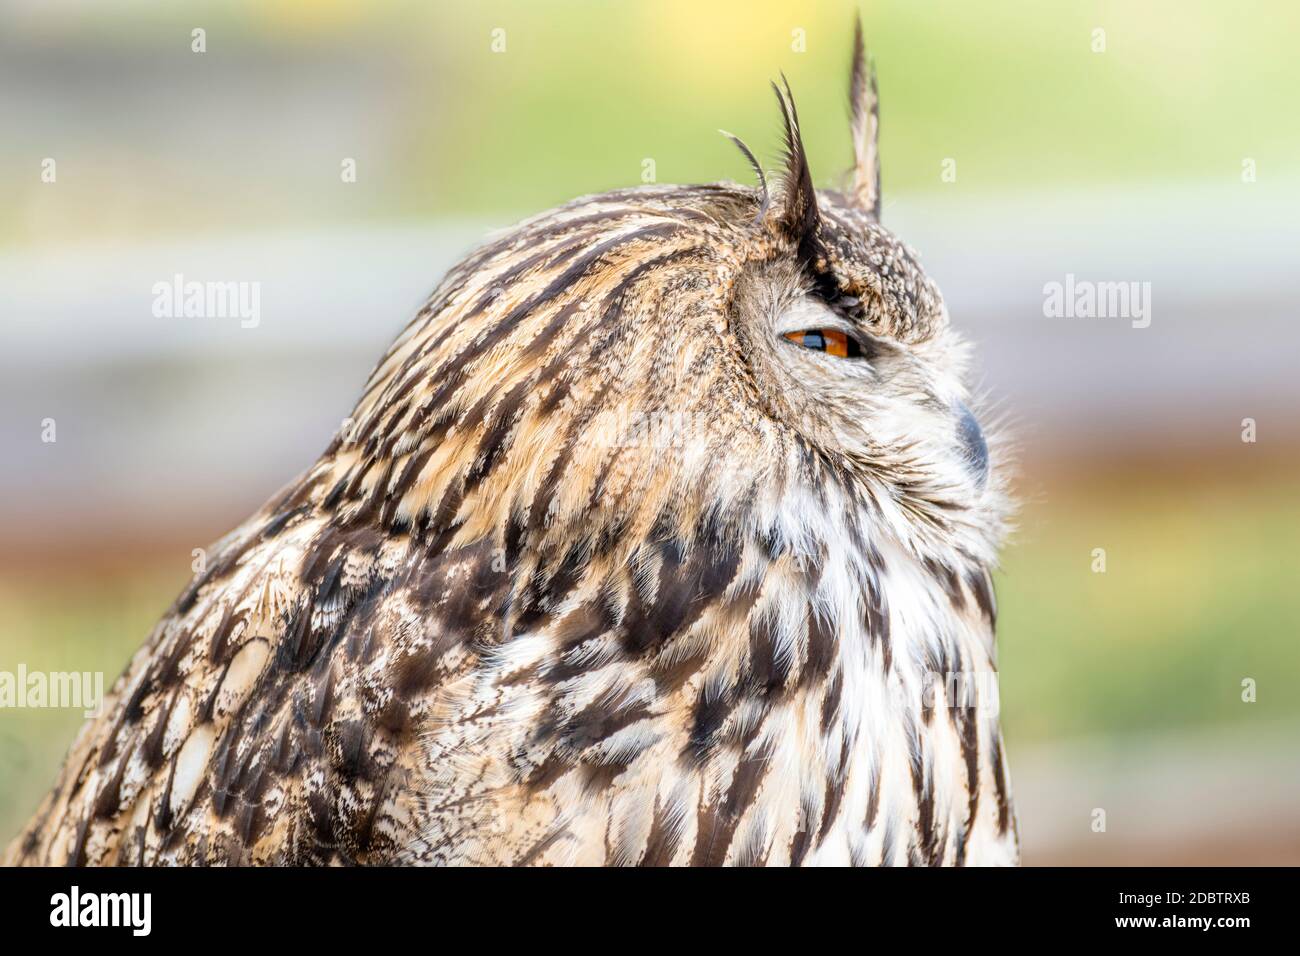 Closeup Profile Head Shot of Eastern screech owl Stock Photo